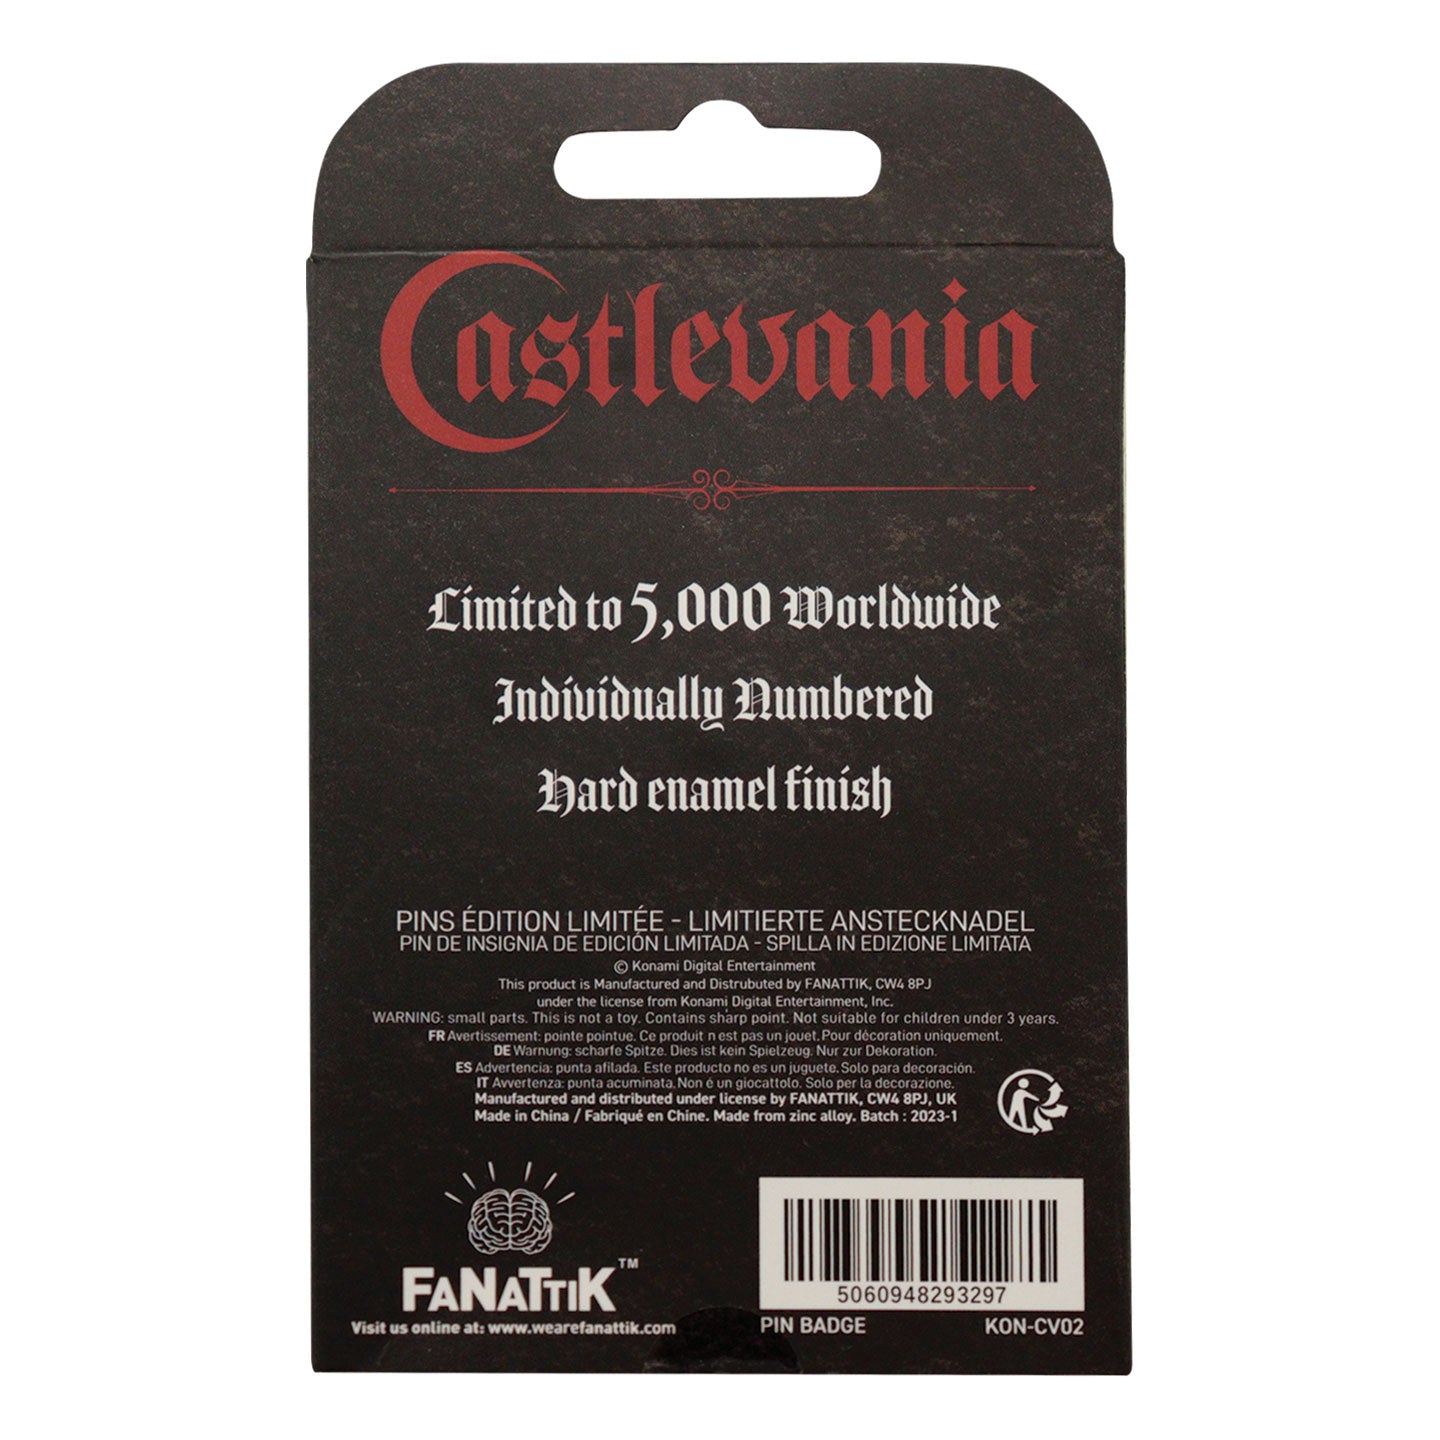 Castlevania Alucard Limited Edition Pin Badge